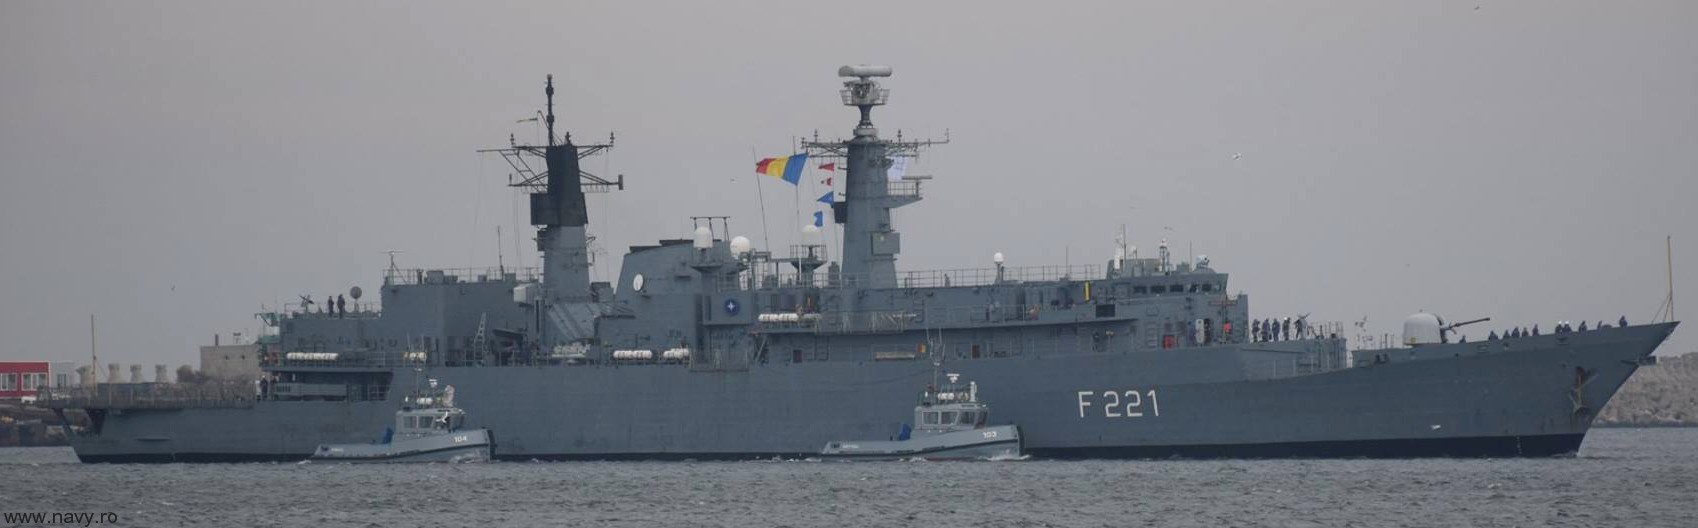 f-221 ros regele ferdinand frigate romanian navy type 22 broadsword class 53